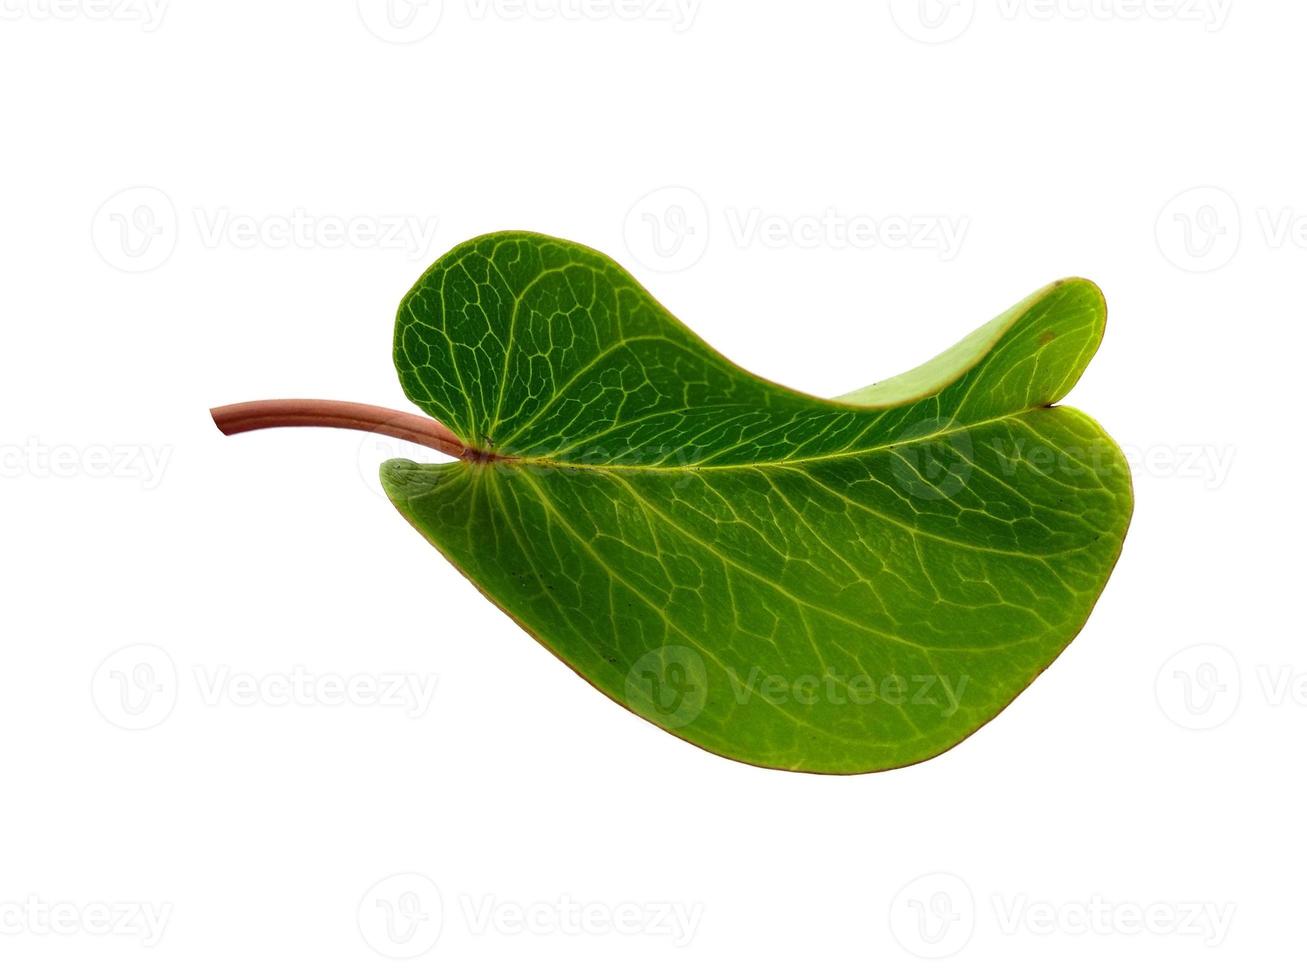 ipomoea pes-caprae blad eller beach morning glory blad isolerad på vit bakgrund foto